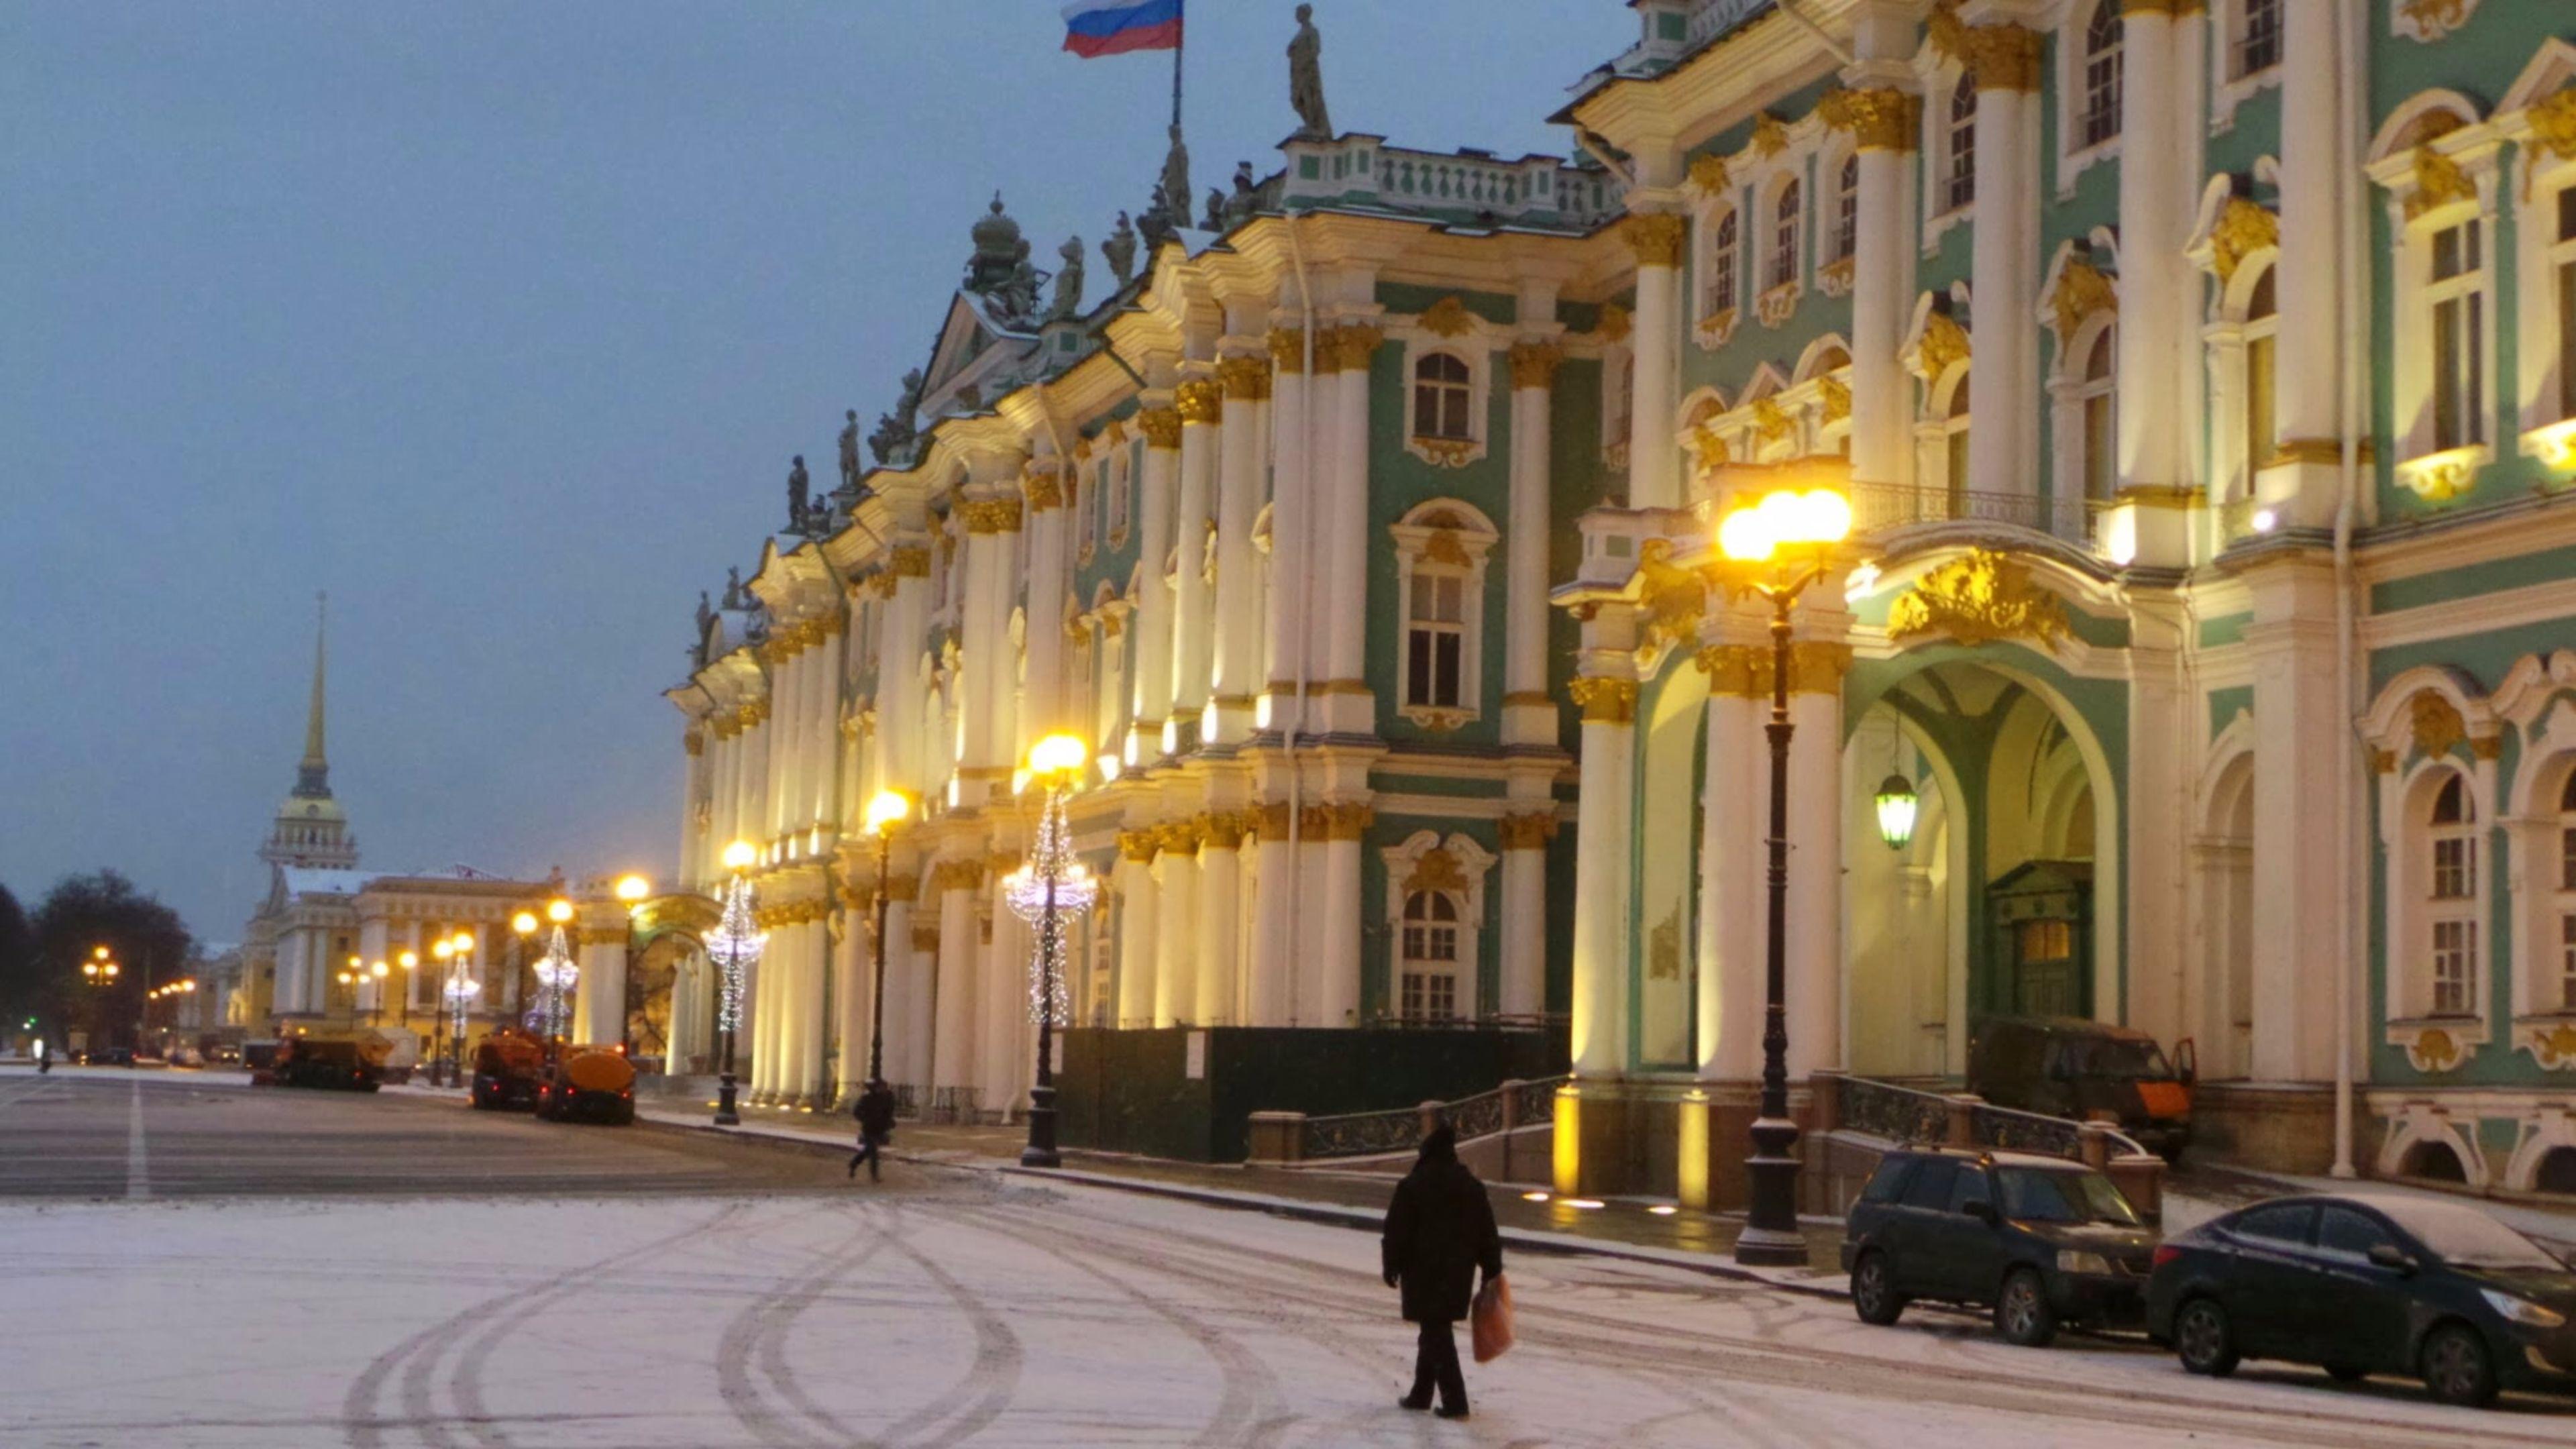 Winter 4K St Petersburg, Russia Wallpaper. Free 4K Wallpaper